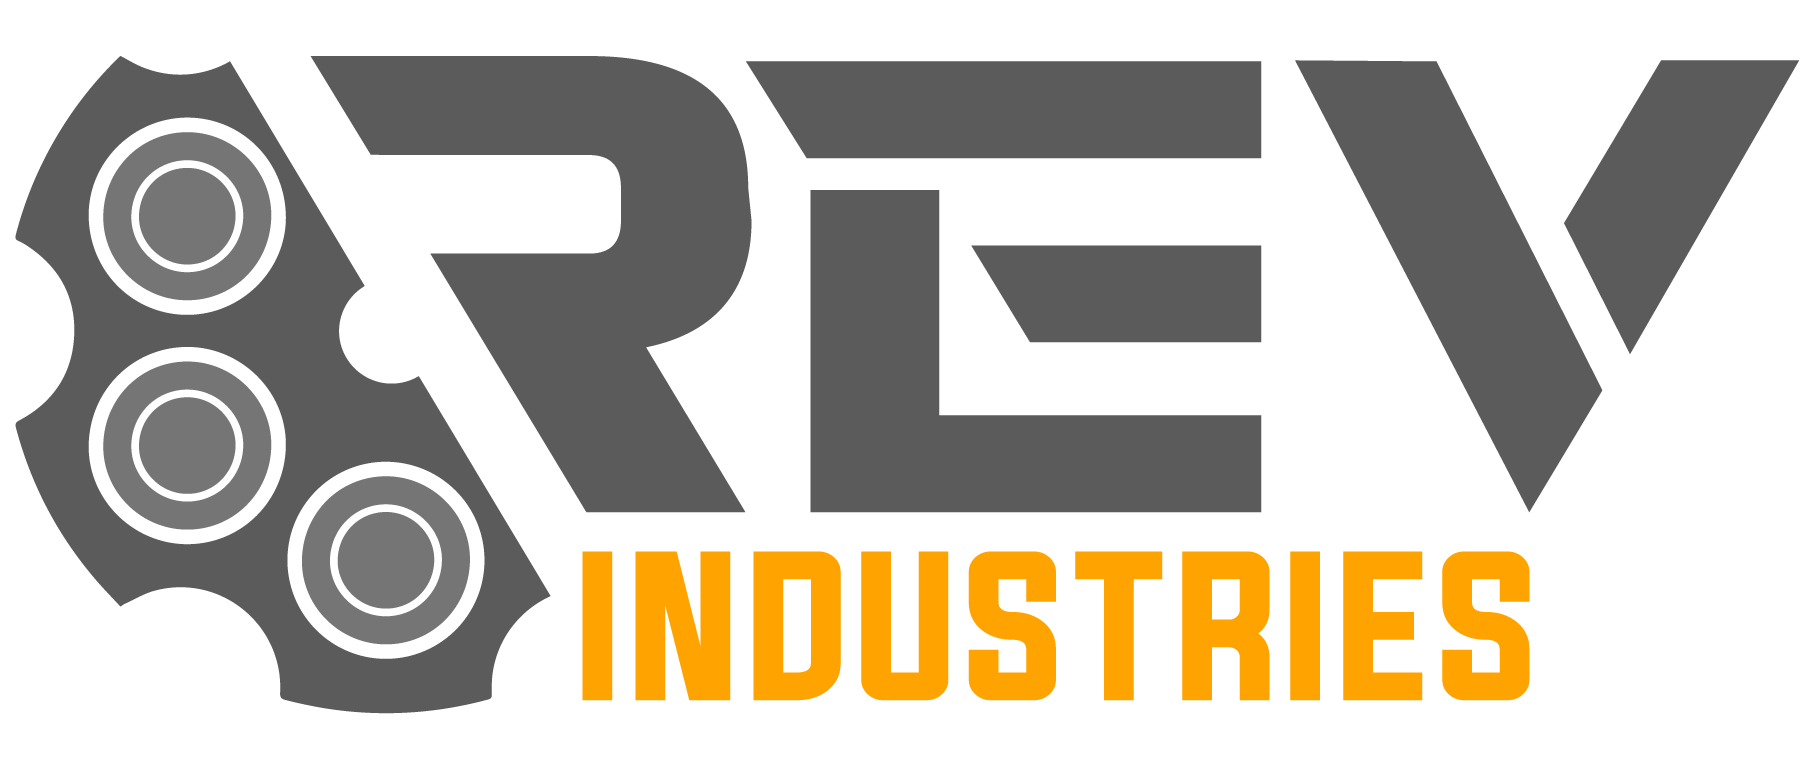 Rev Industries Logo